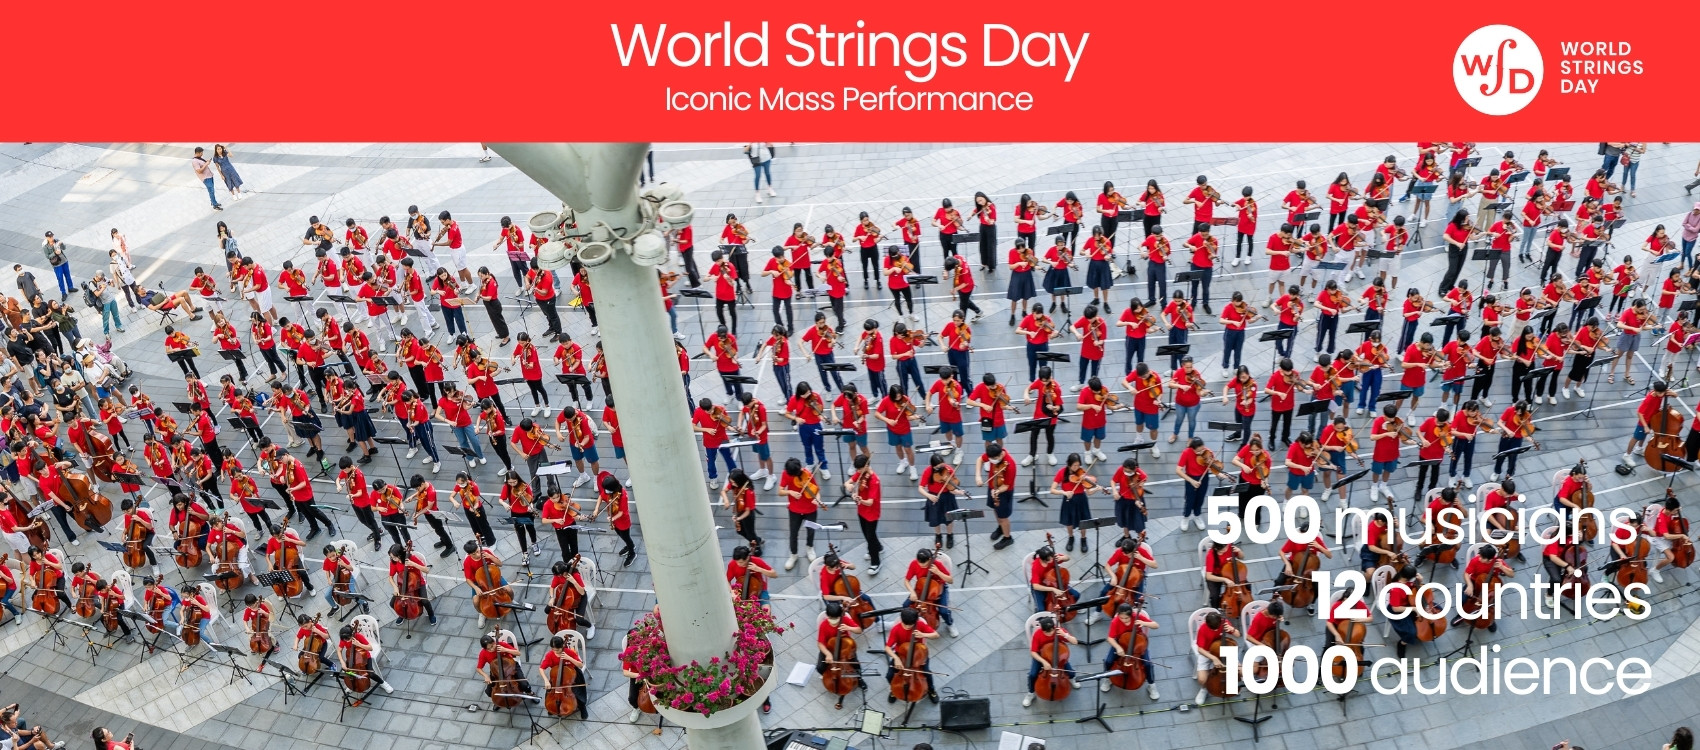 World strings day